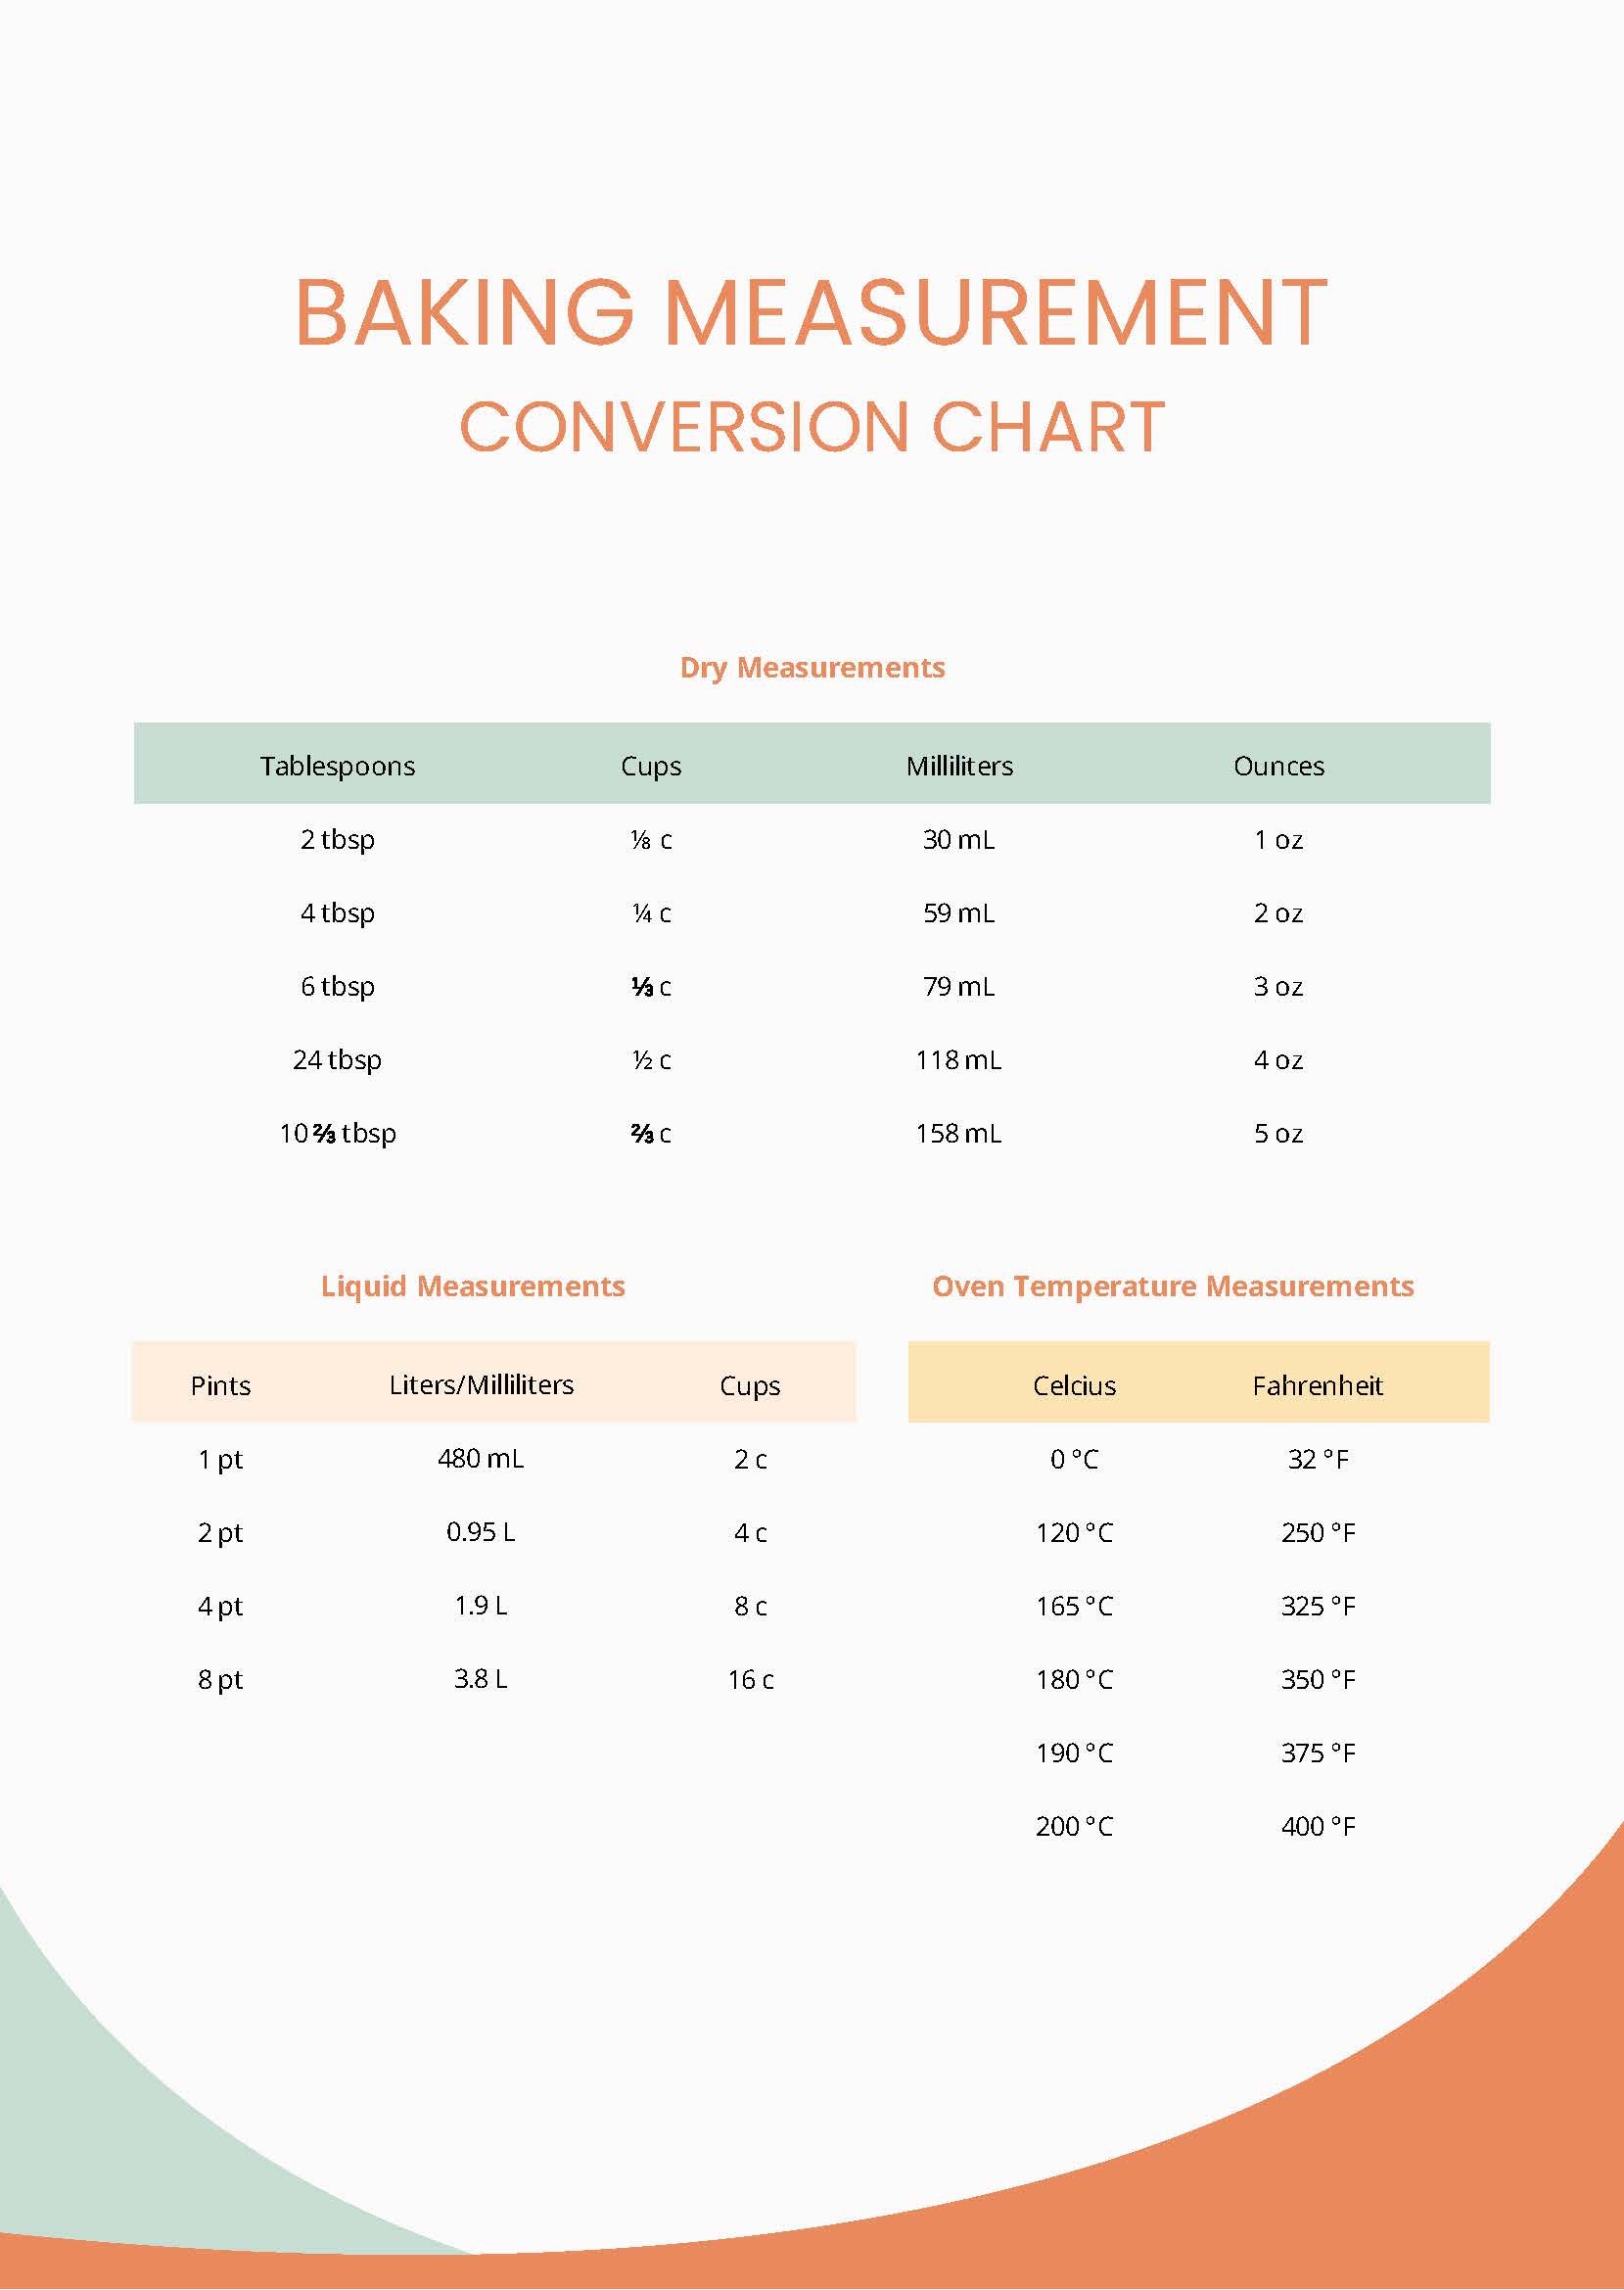 Baking Measurement Conversion Chart in PDF